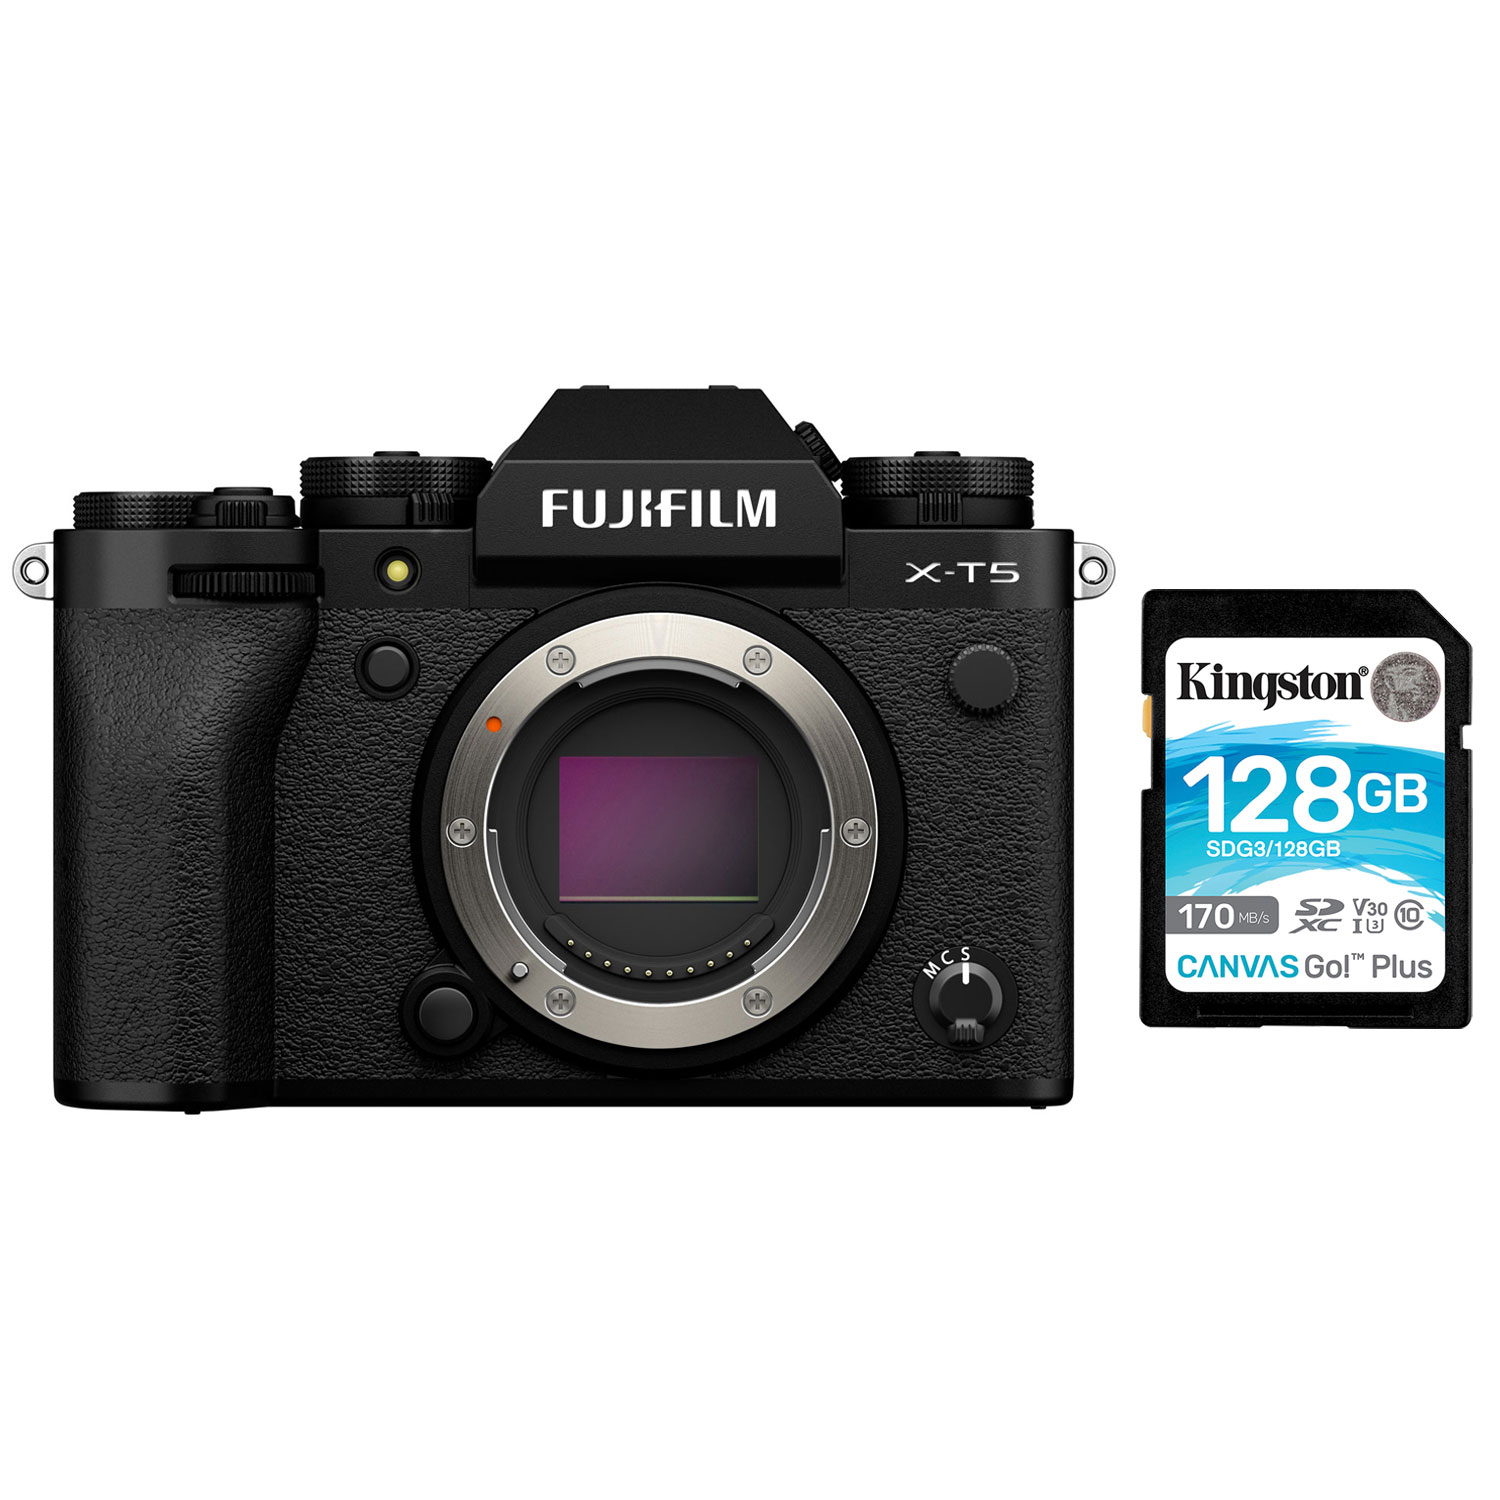 Fujifilm X-T5 Mirrorless Camera with XF 18-55mm f/2.8-4 R LM OIS Lens Kit & 128GB SDXC Memory Card